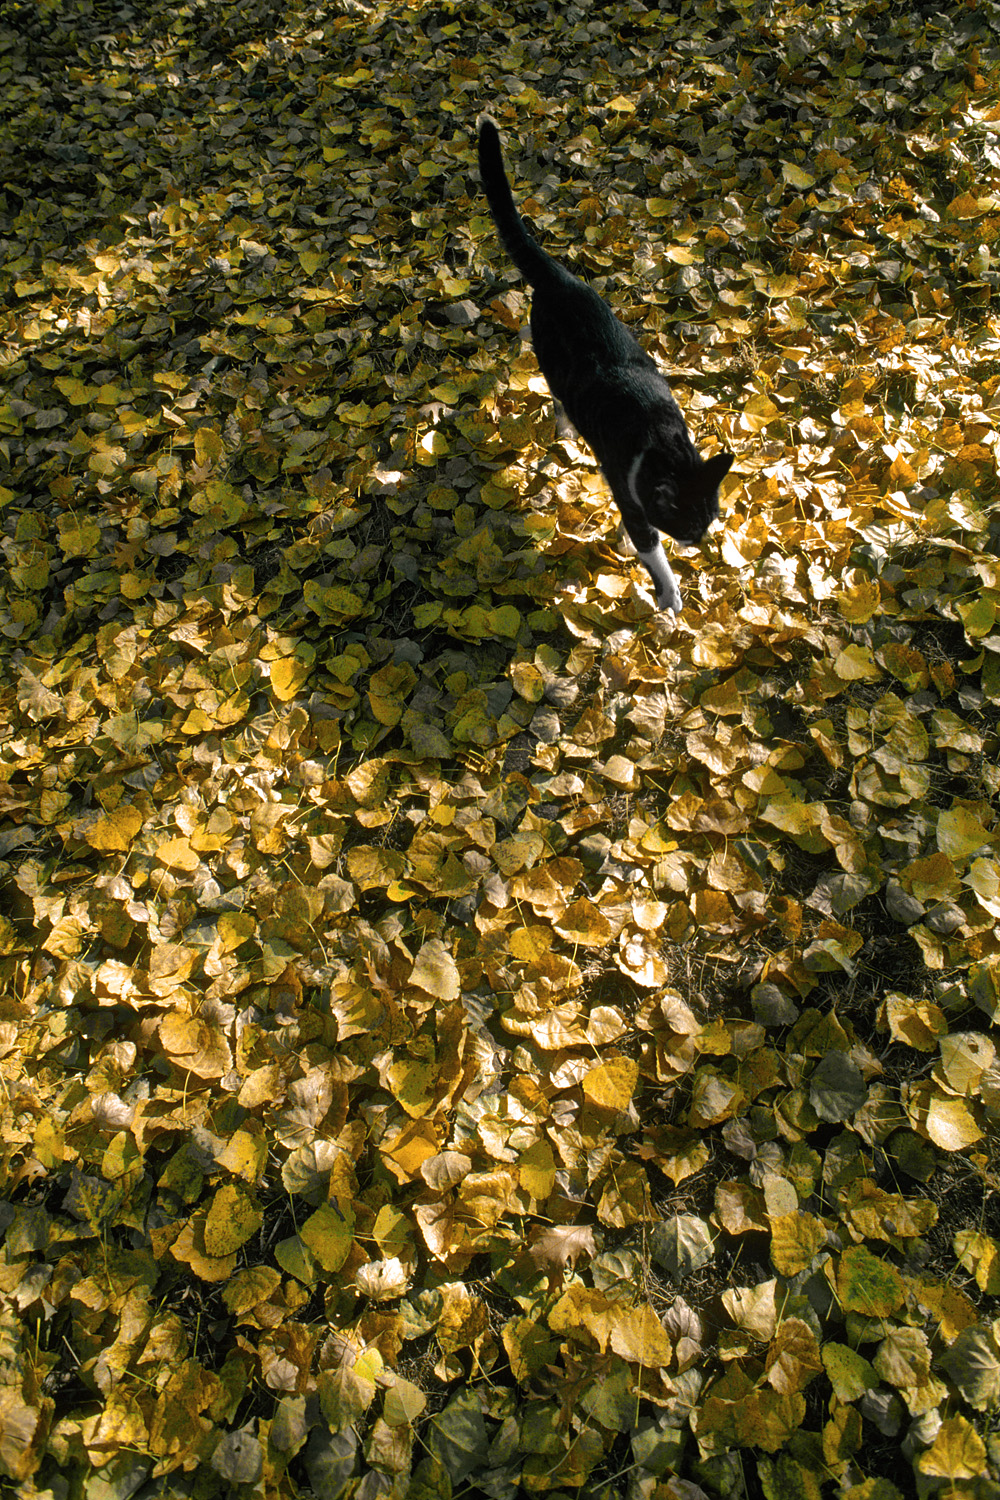 bill-hocker-cat-&-cottonwood-leaves-twin-brook-farm-california-2001